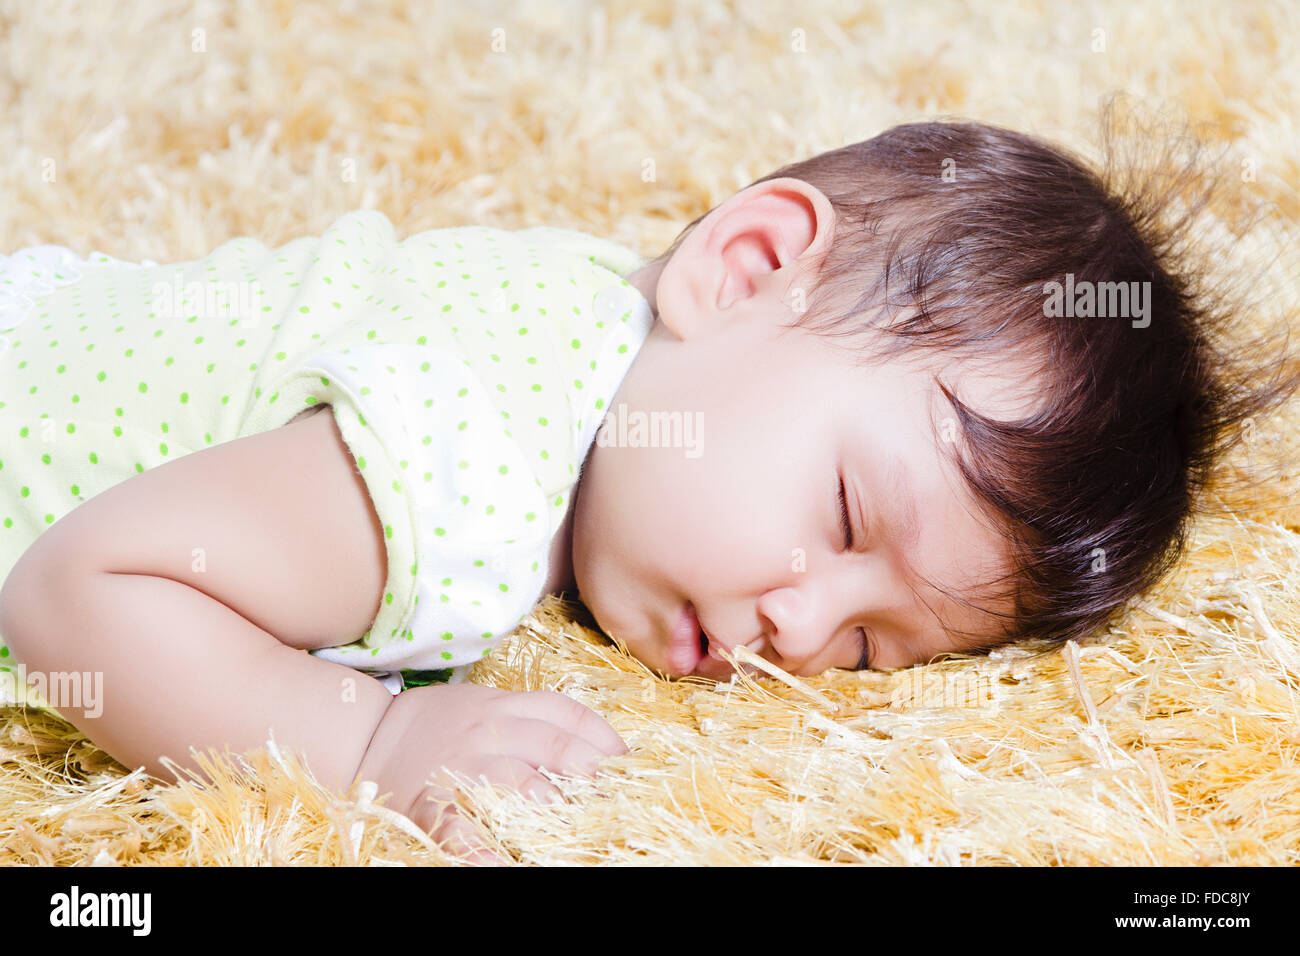 1 Child Baby Boy Rug Lying down Stock Photo